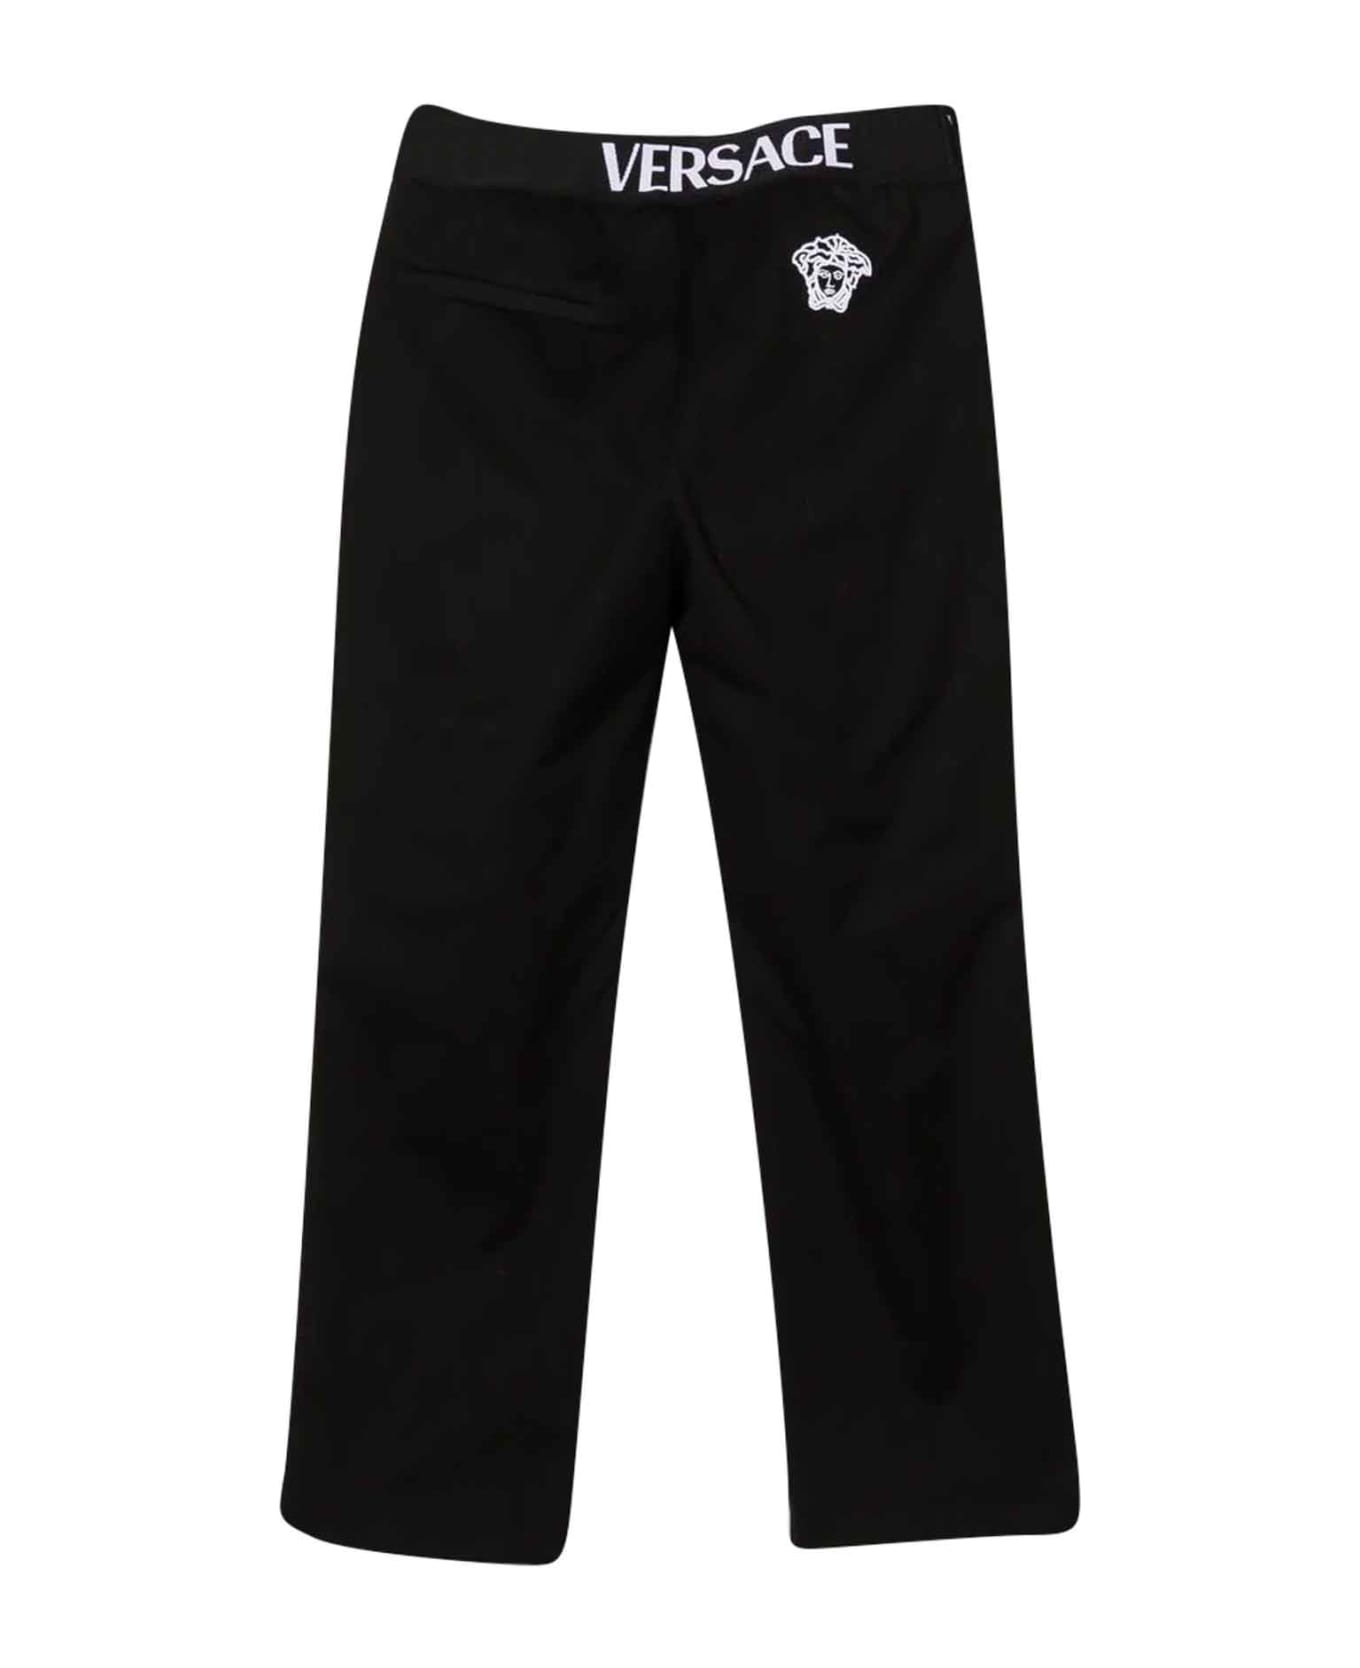 Versace Black Trousers Unisex Kids - Nero